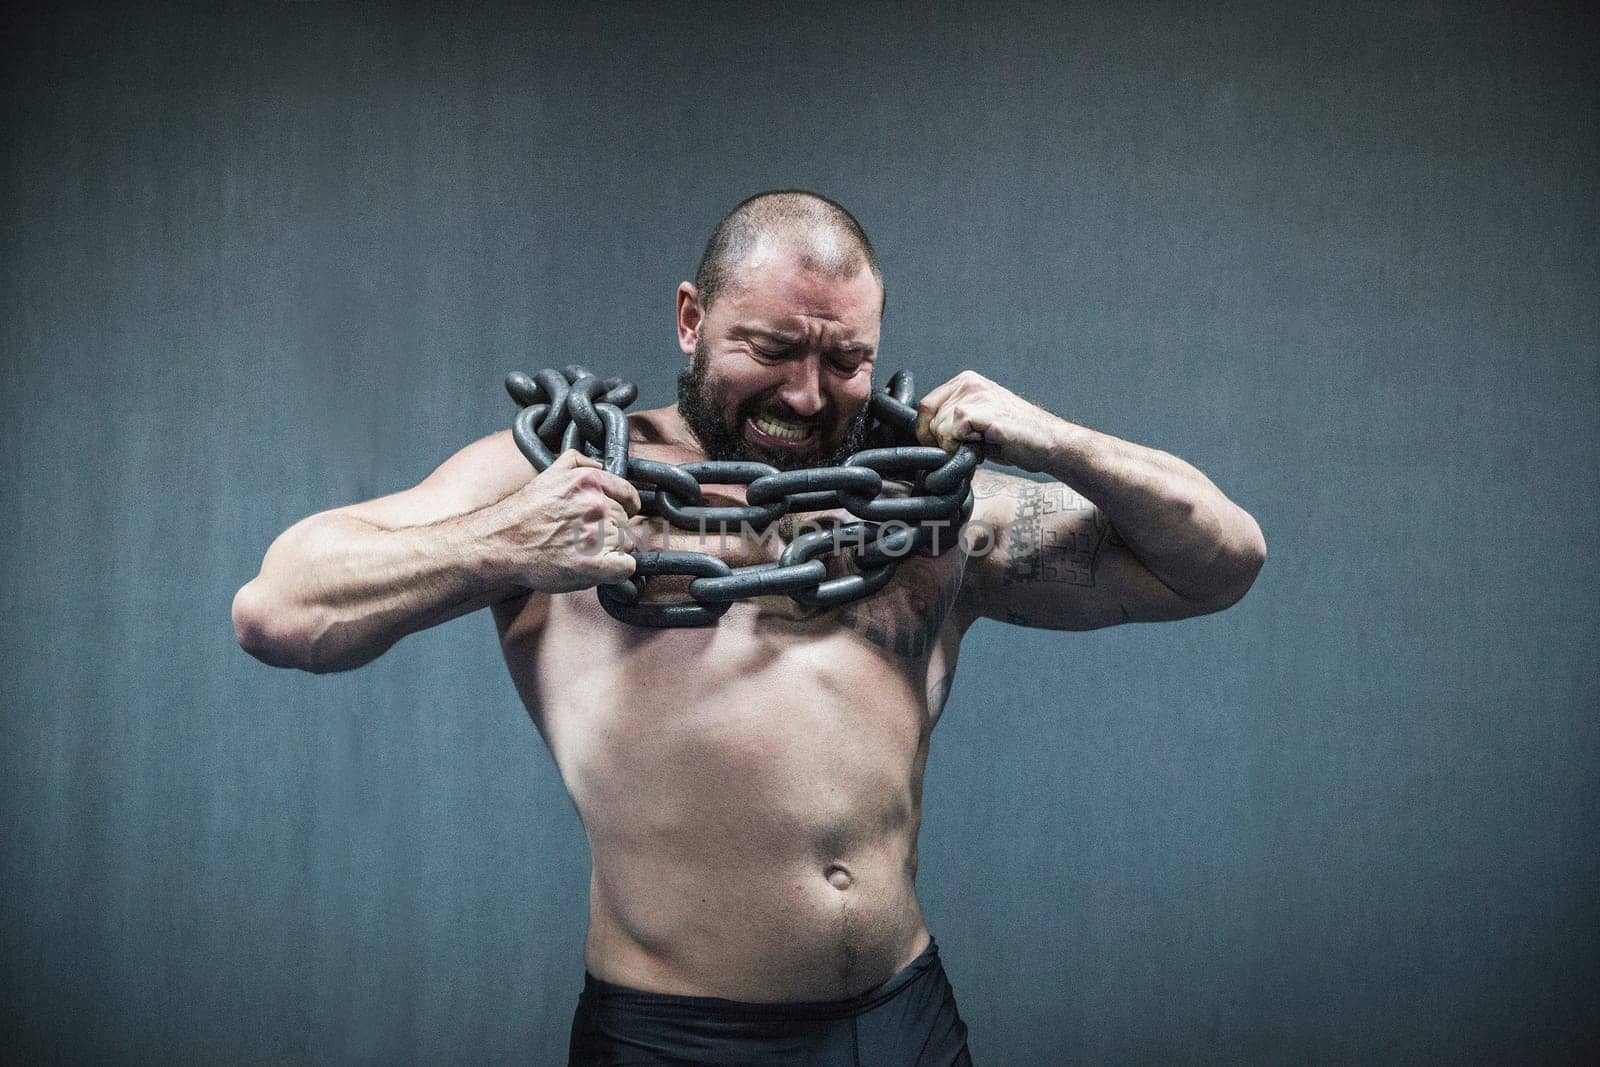 Bila Tserkva, Ukraine, October 15,2016: The athlete is trying to break the chain